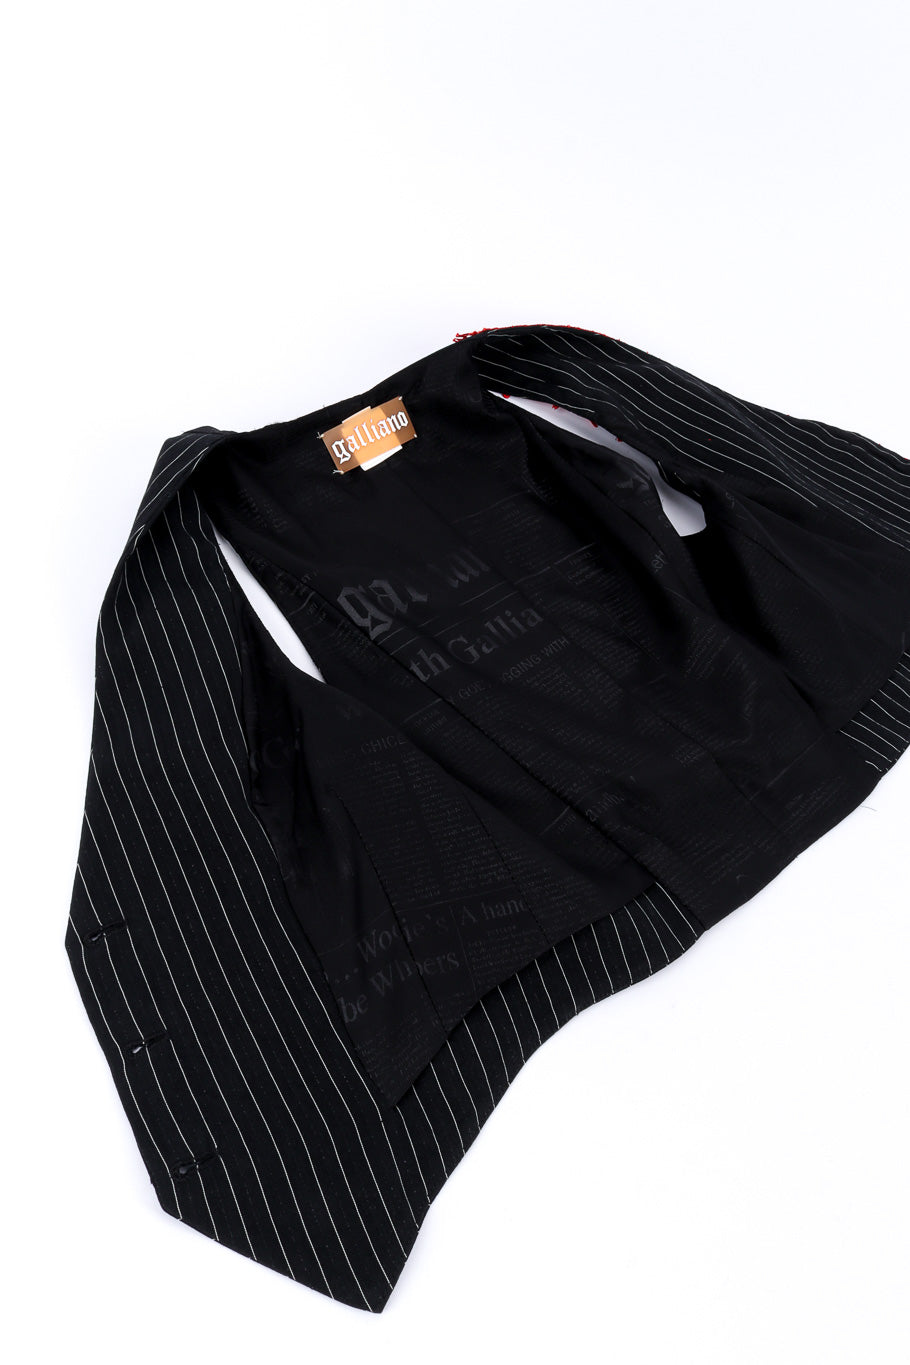 Pinstripe vest by John Galliano lining @recessla